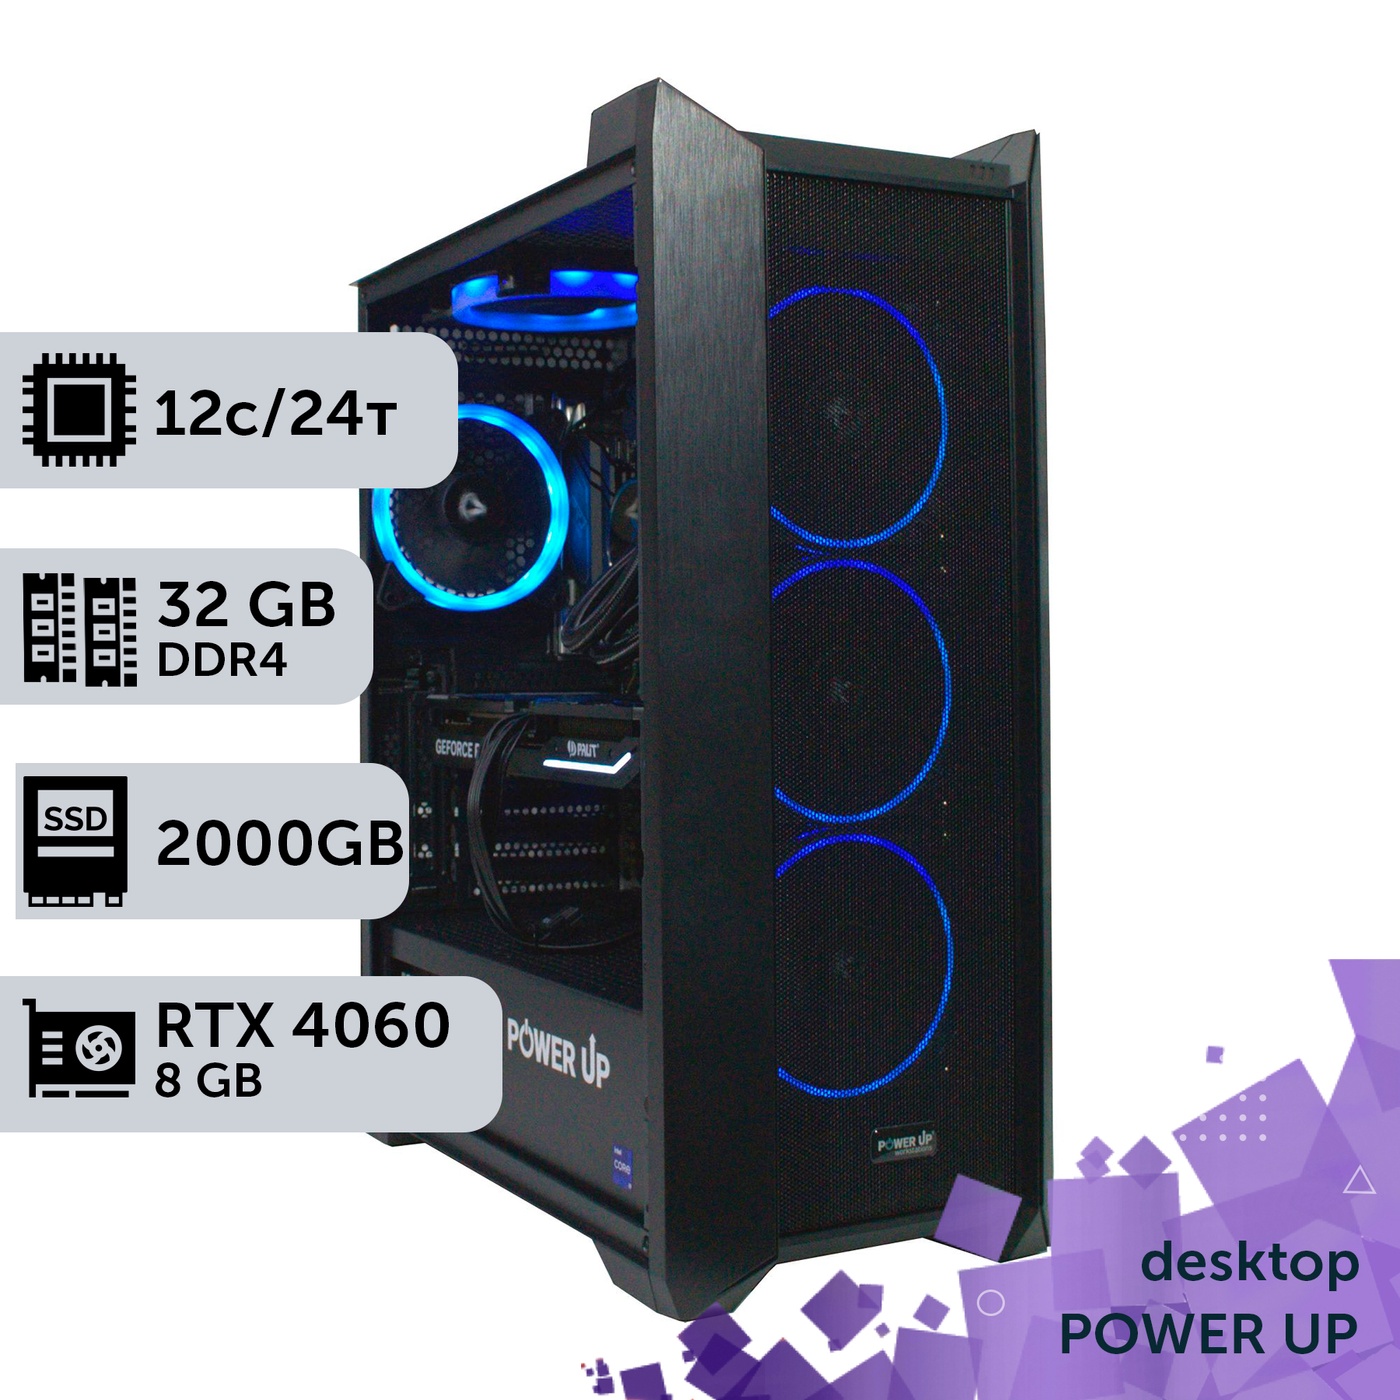 Рабочая станция PowerUp Desktop #256 Ryzen 9 5900x/32 GB/SSD 2TB/GeForce RTX 4060 8GB